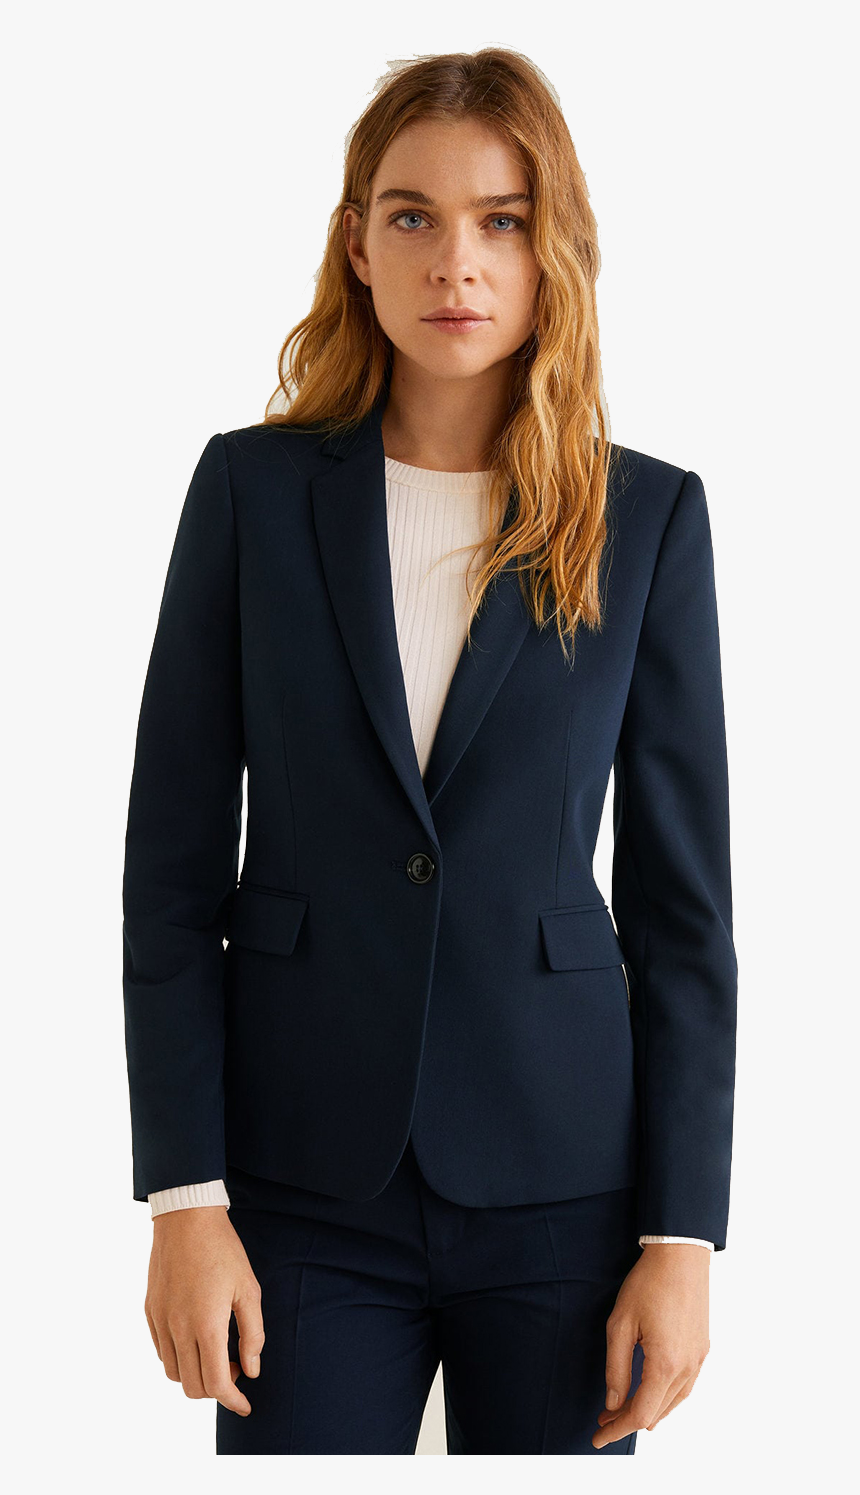 blazer for women png background formal blue blazer for women transparent png kindpng blazer for women png background